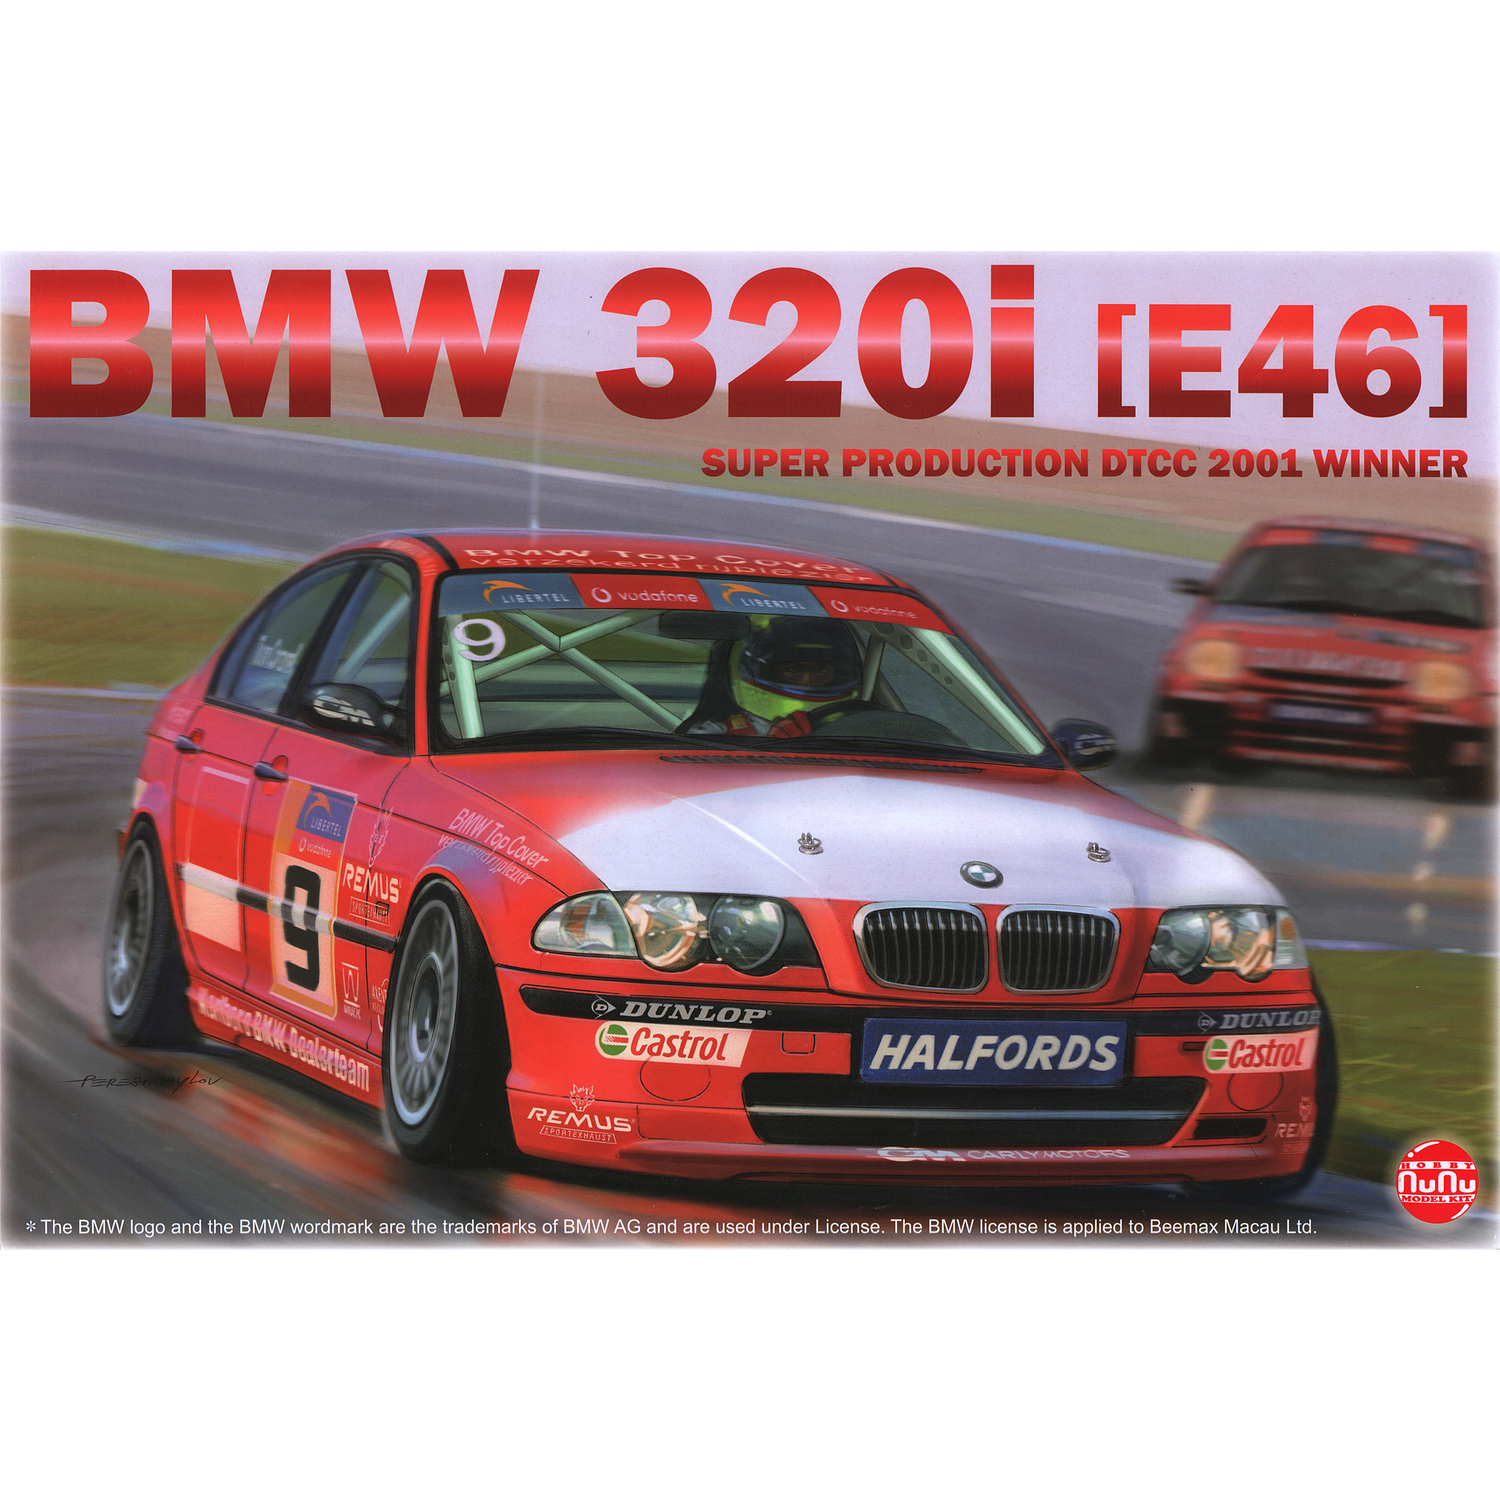 BMW 320i E46 Super Production DTCC 2001 Winner 1/24 Model Car Kit #PN24007 by Platz